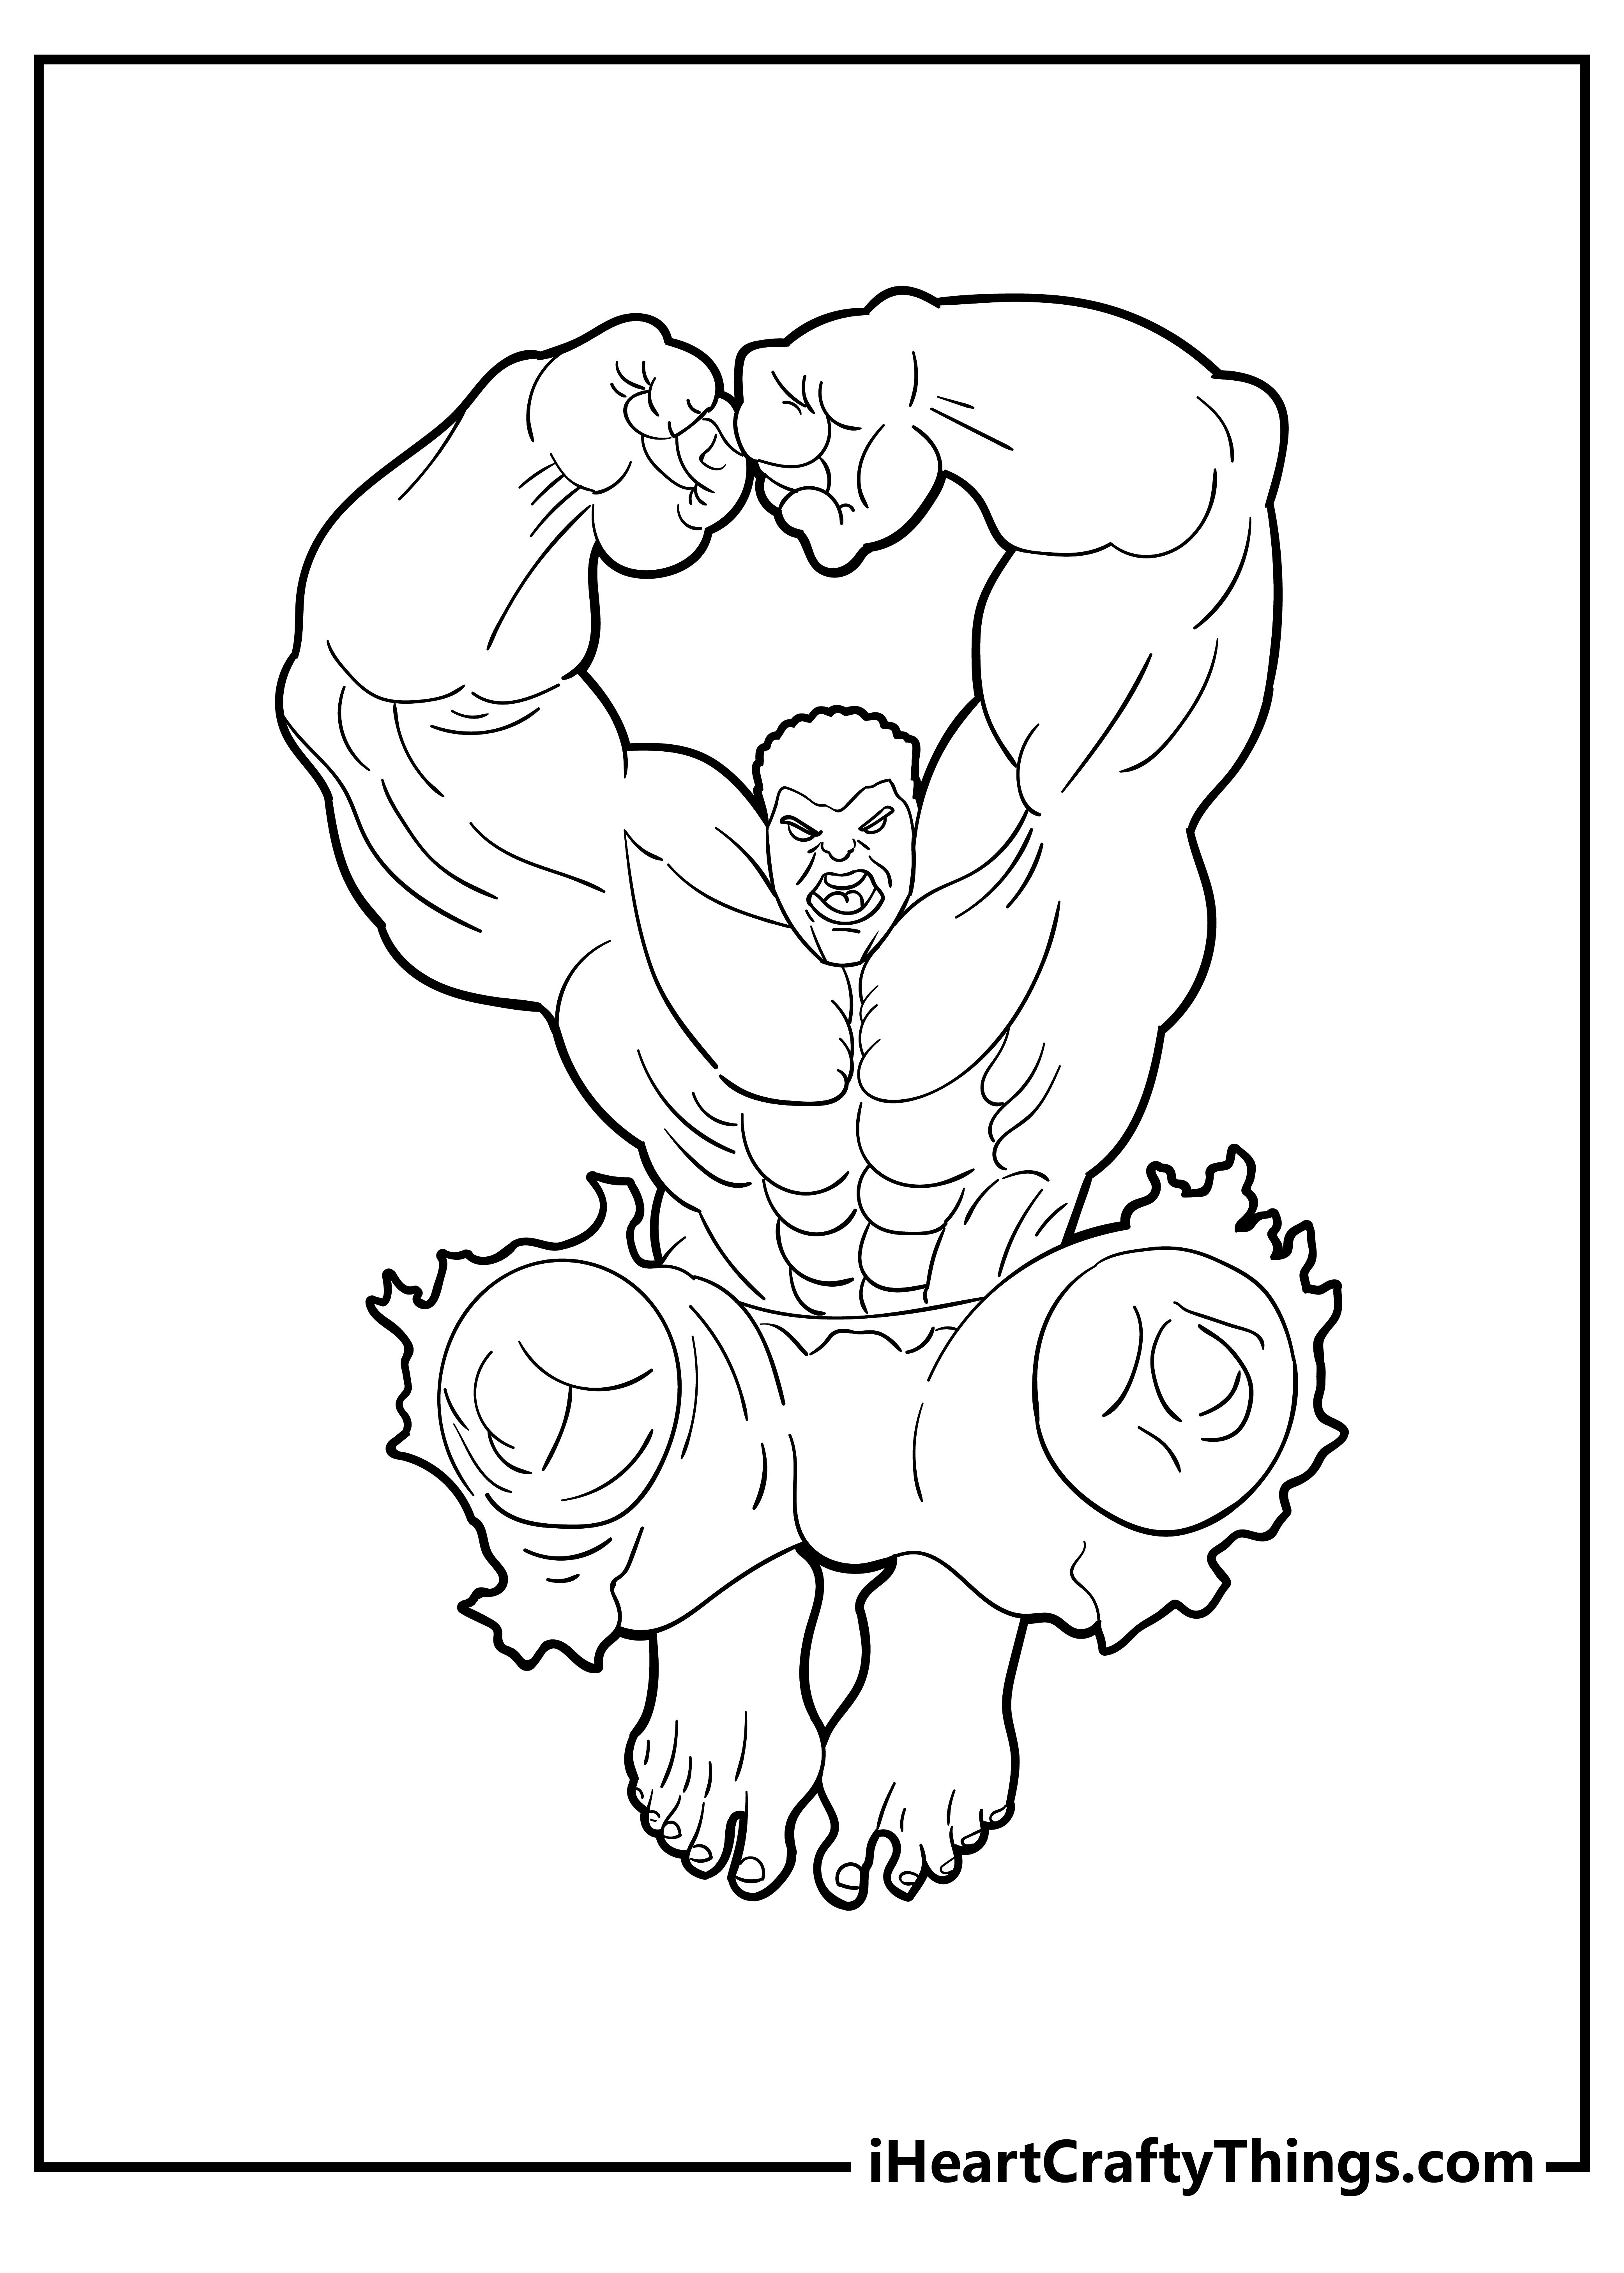 Hulk Coloring Sheet for children free download